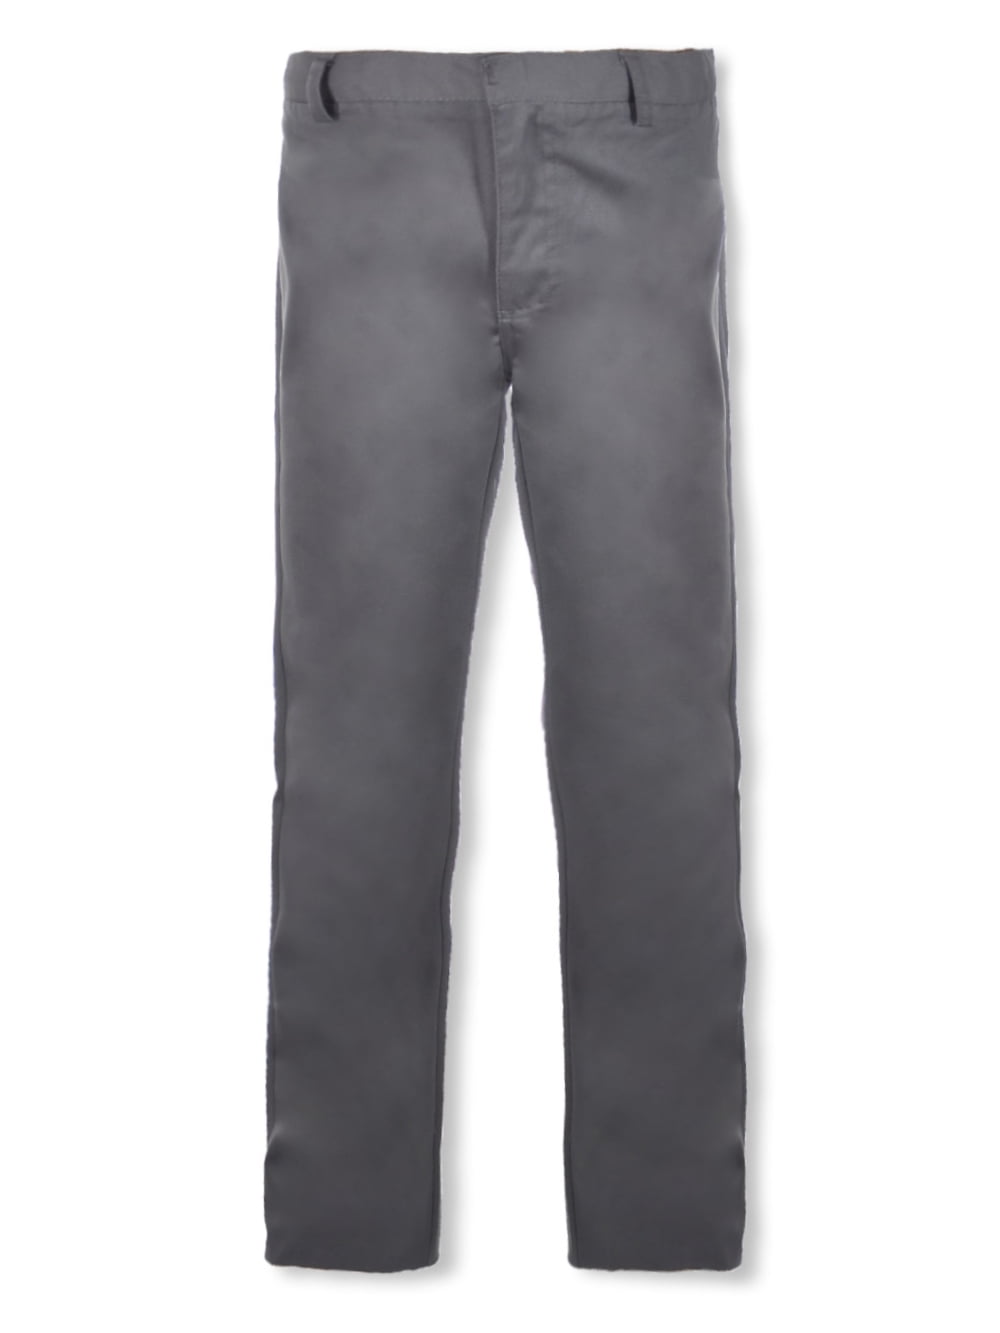 Smith's American Boys' Flat Front Twill Uniform / Dress Pants - gray, 10  husky (Big Boys Husky)